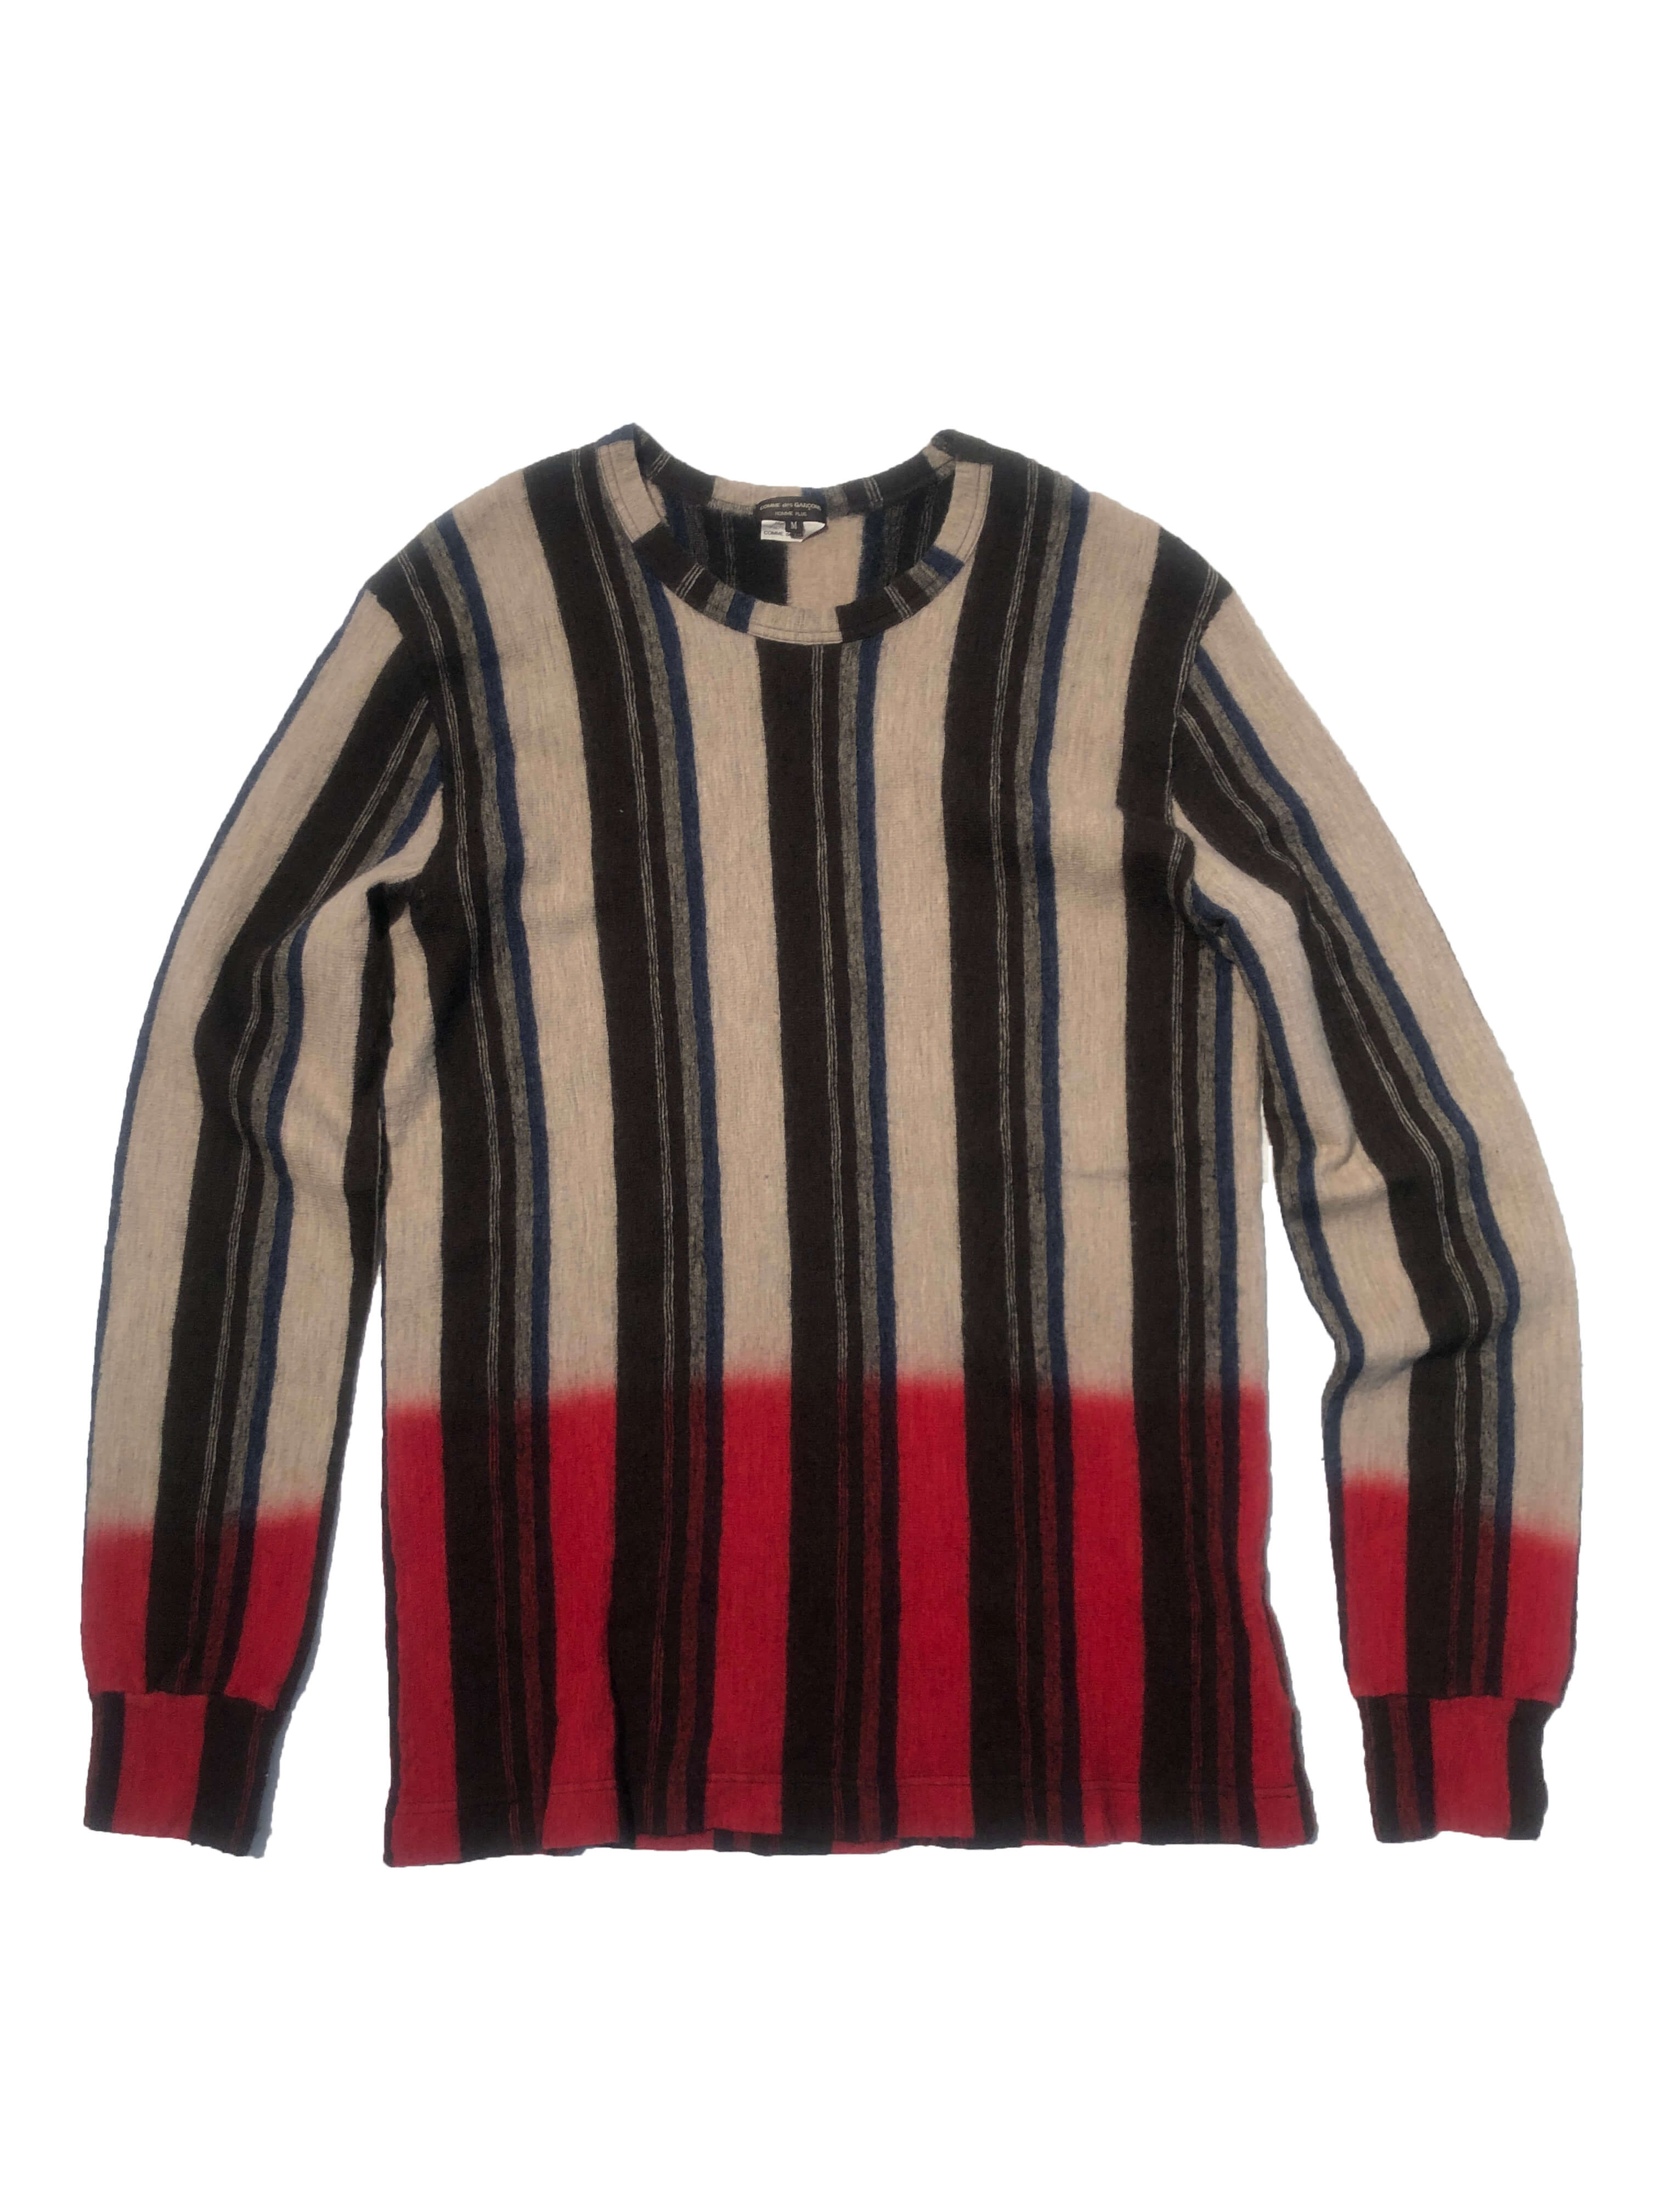 COMME des GARCONS HOMME PLUS ad2011 half-dyed sweater